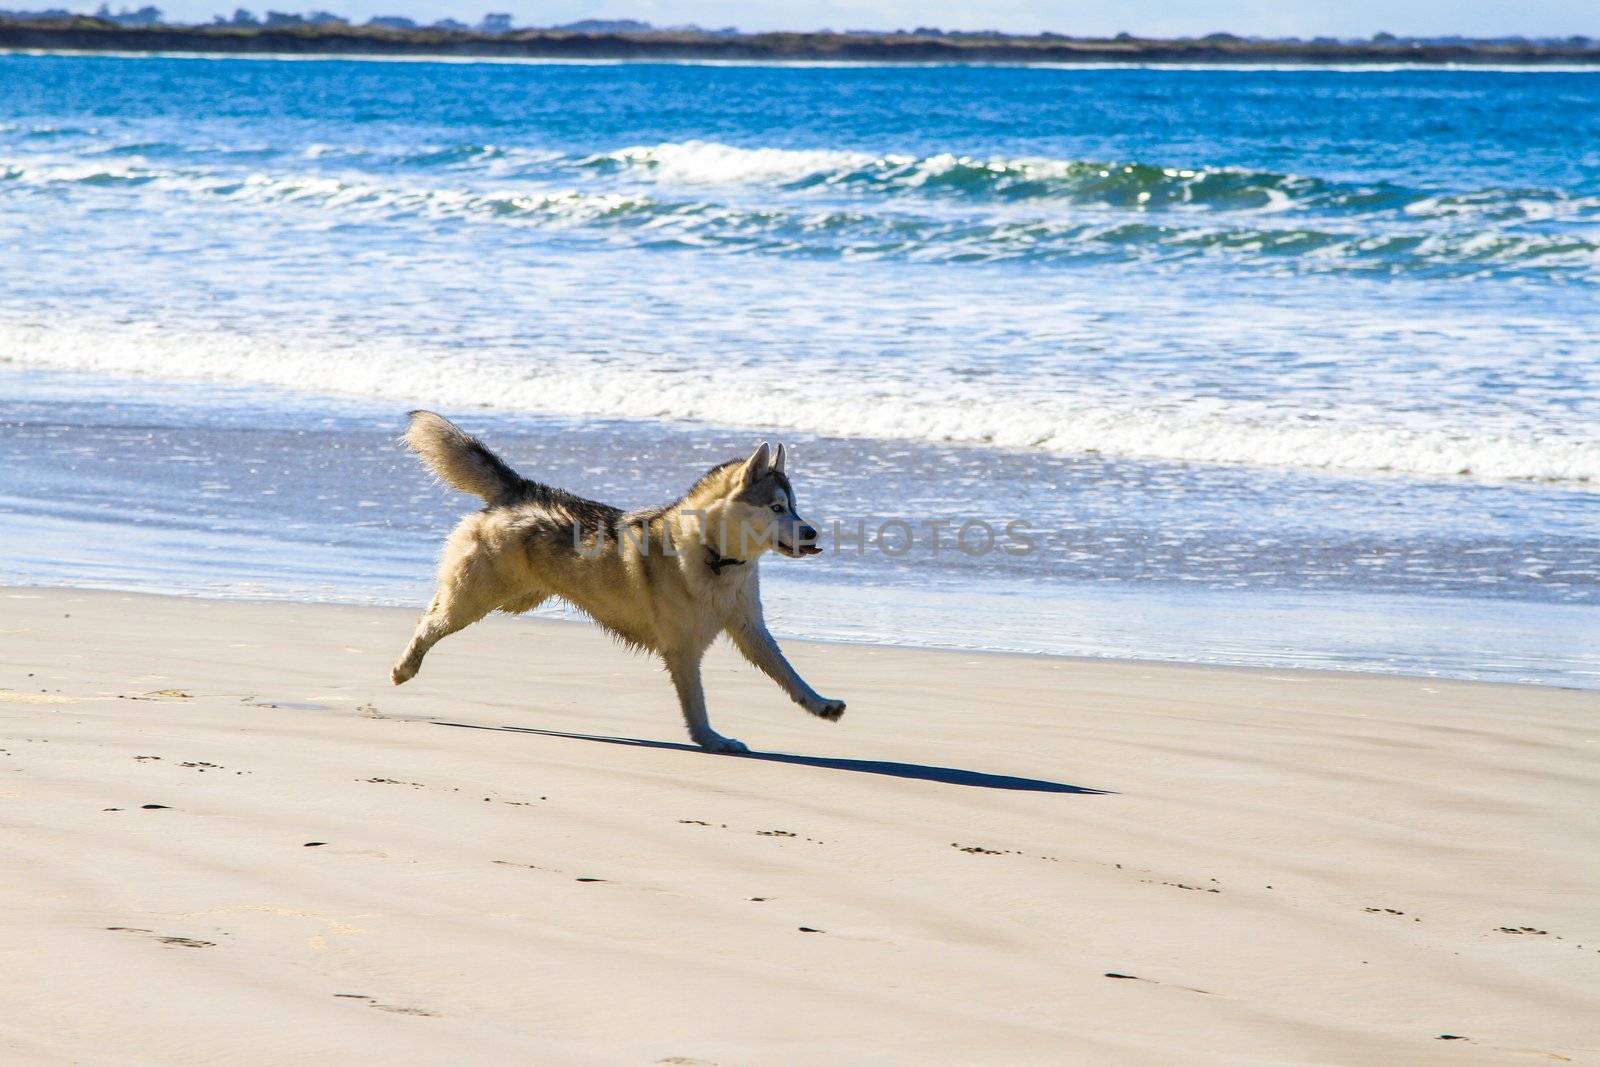 Dog run on sandy beach chase each other near water edge.